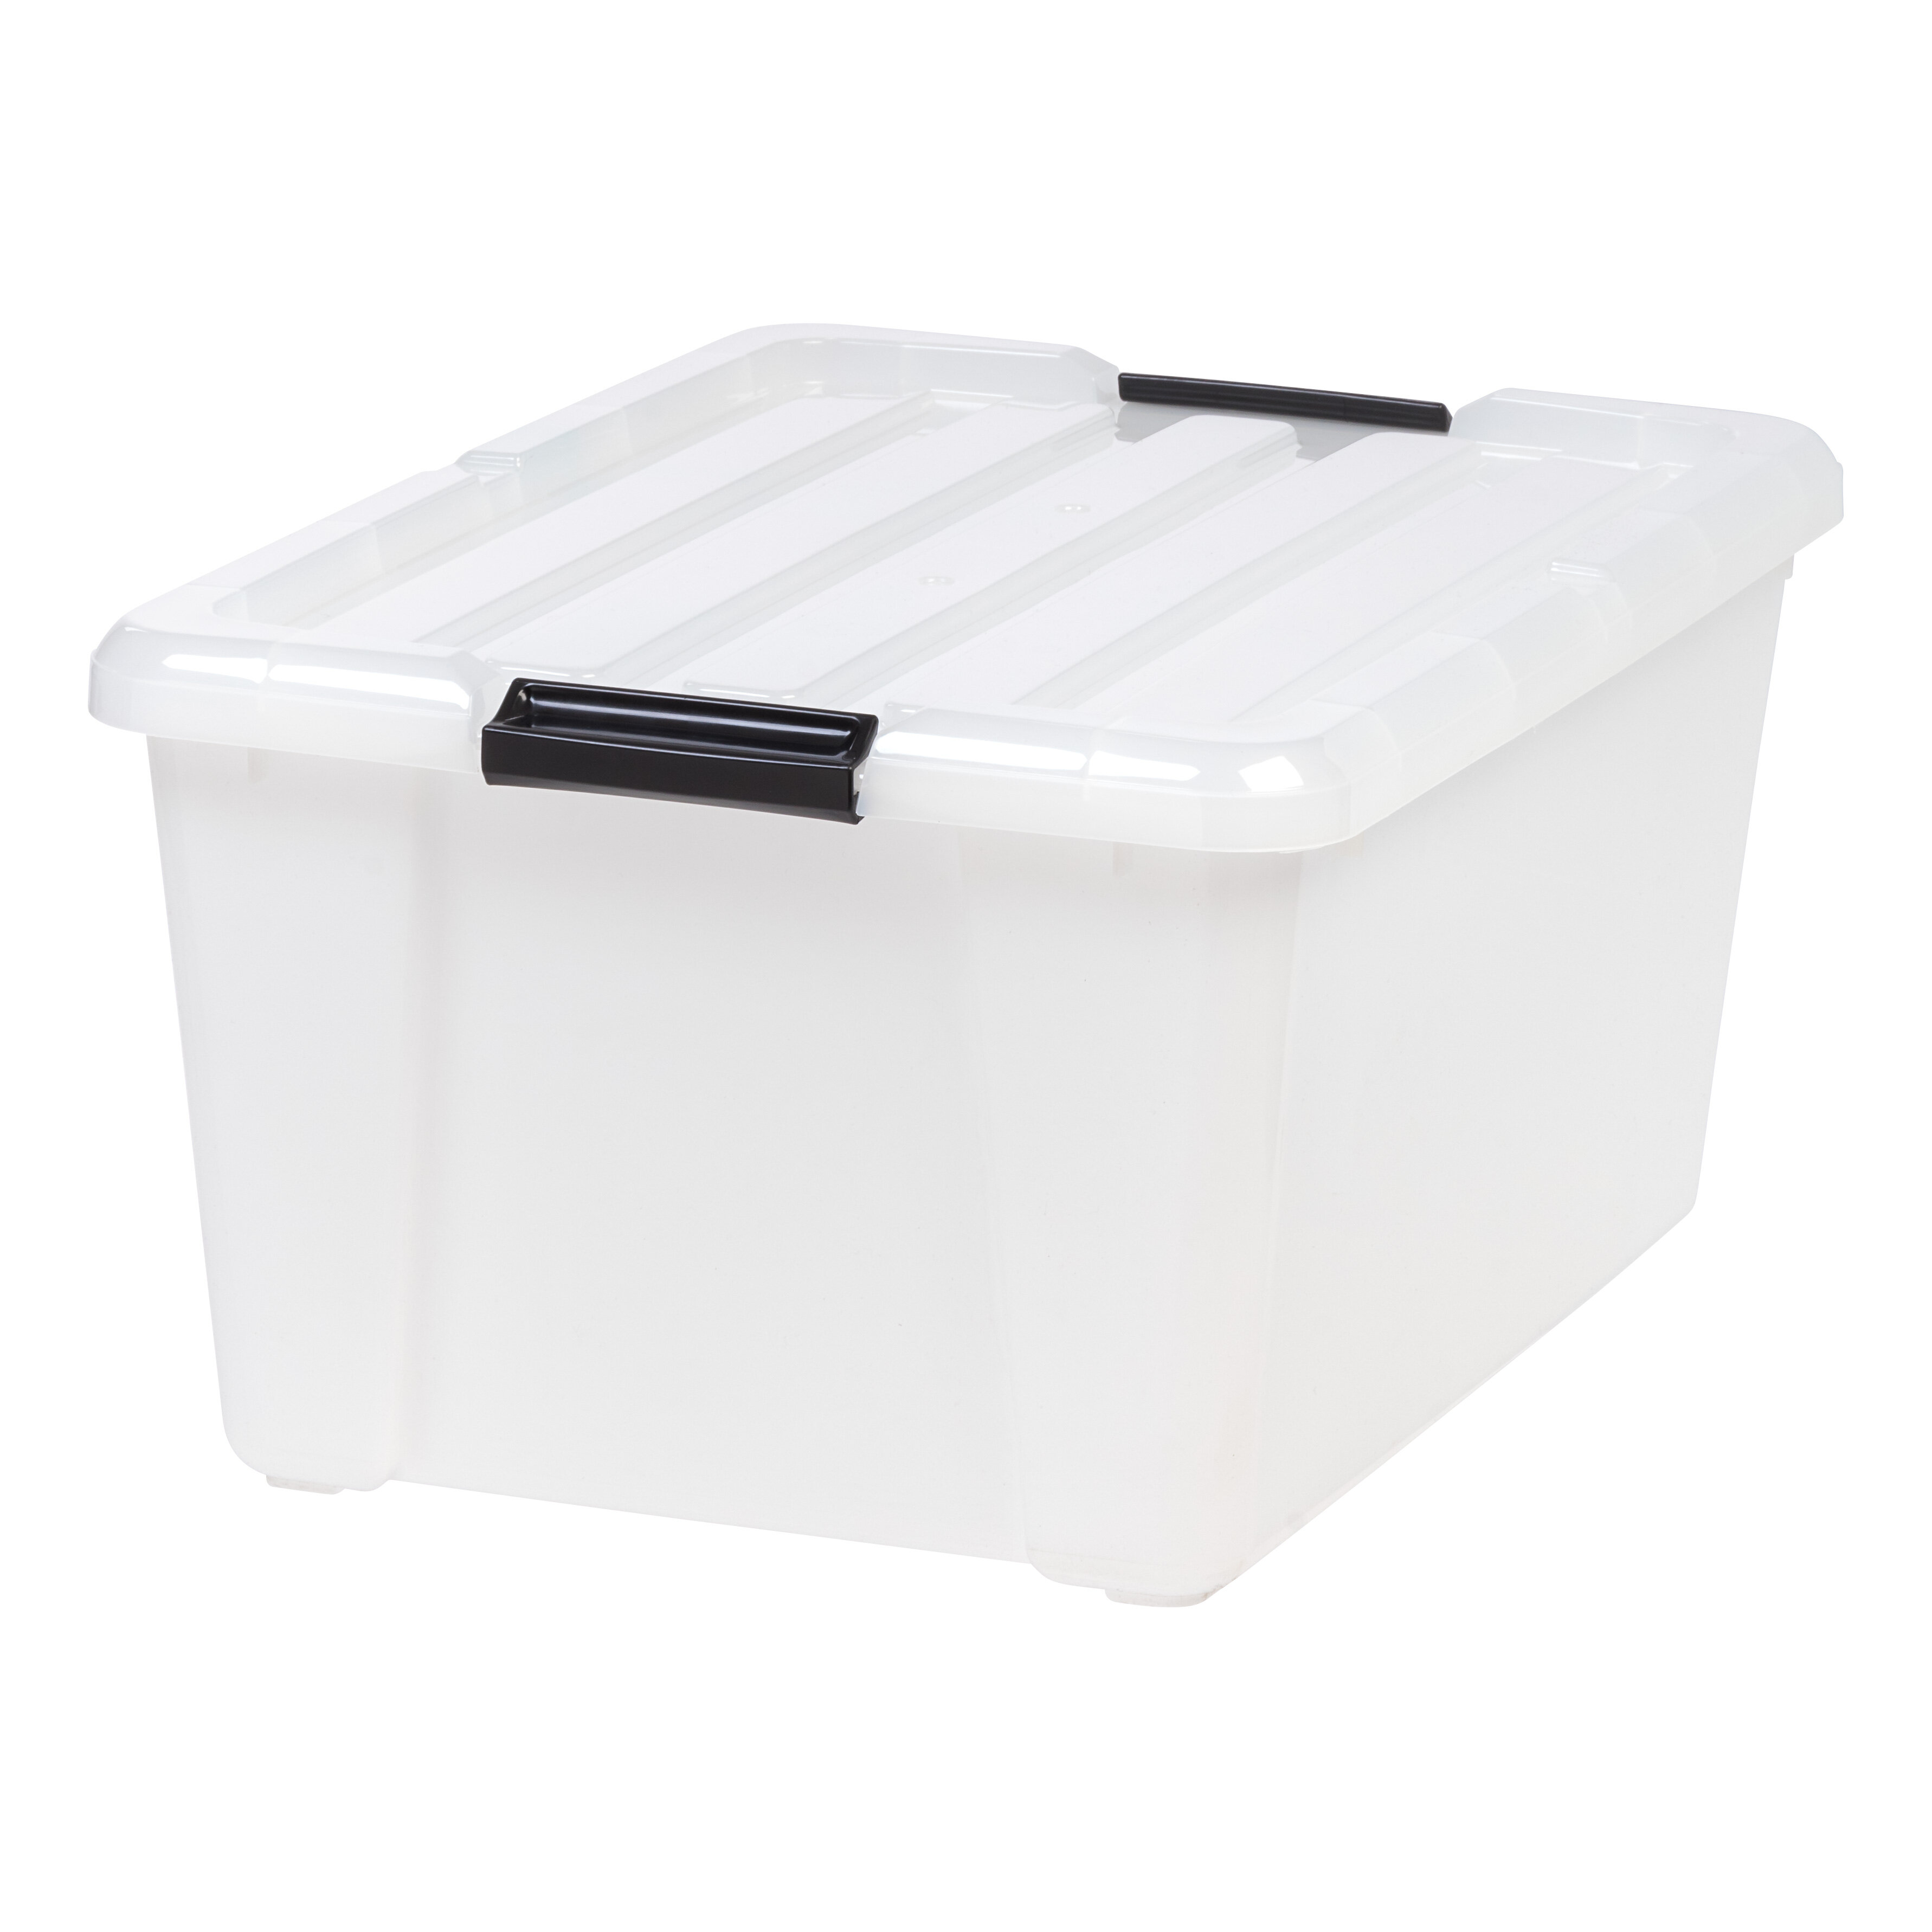 Basics 32 Quart Stackable Plastic Storage Bin with Latching Lid